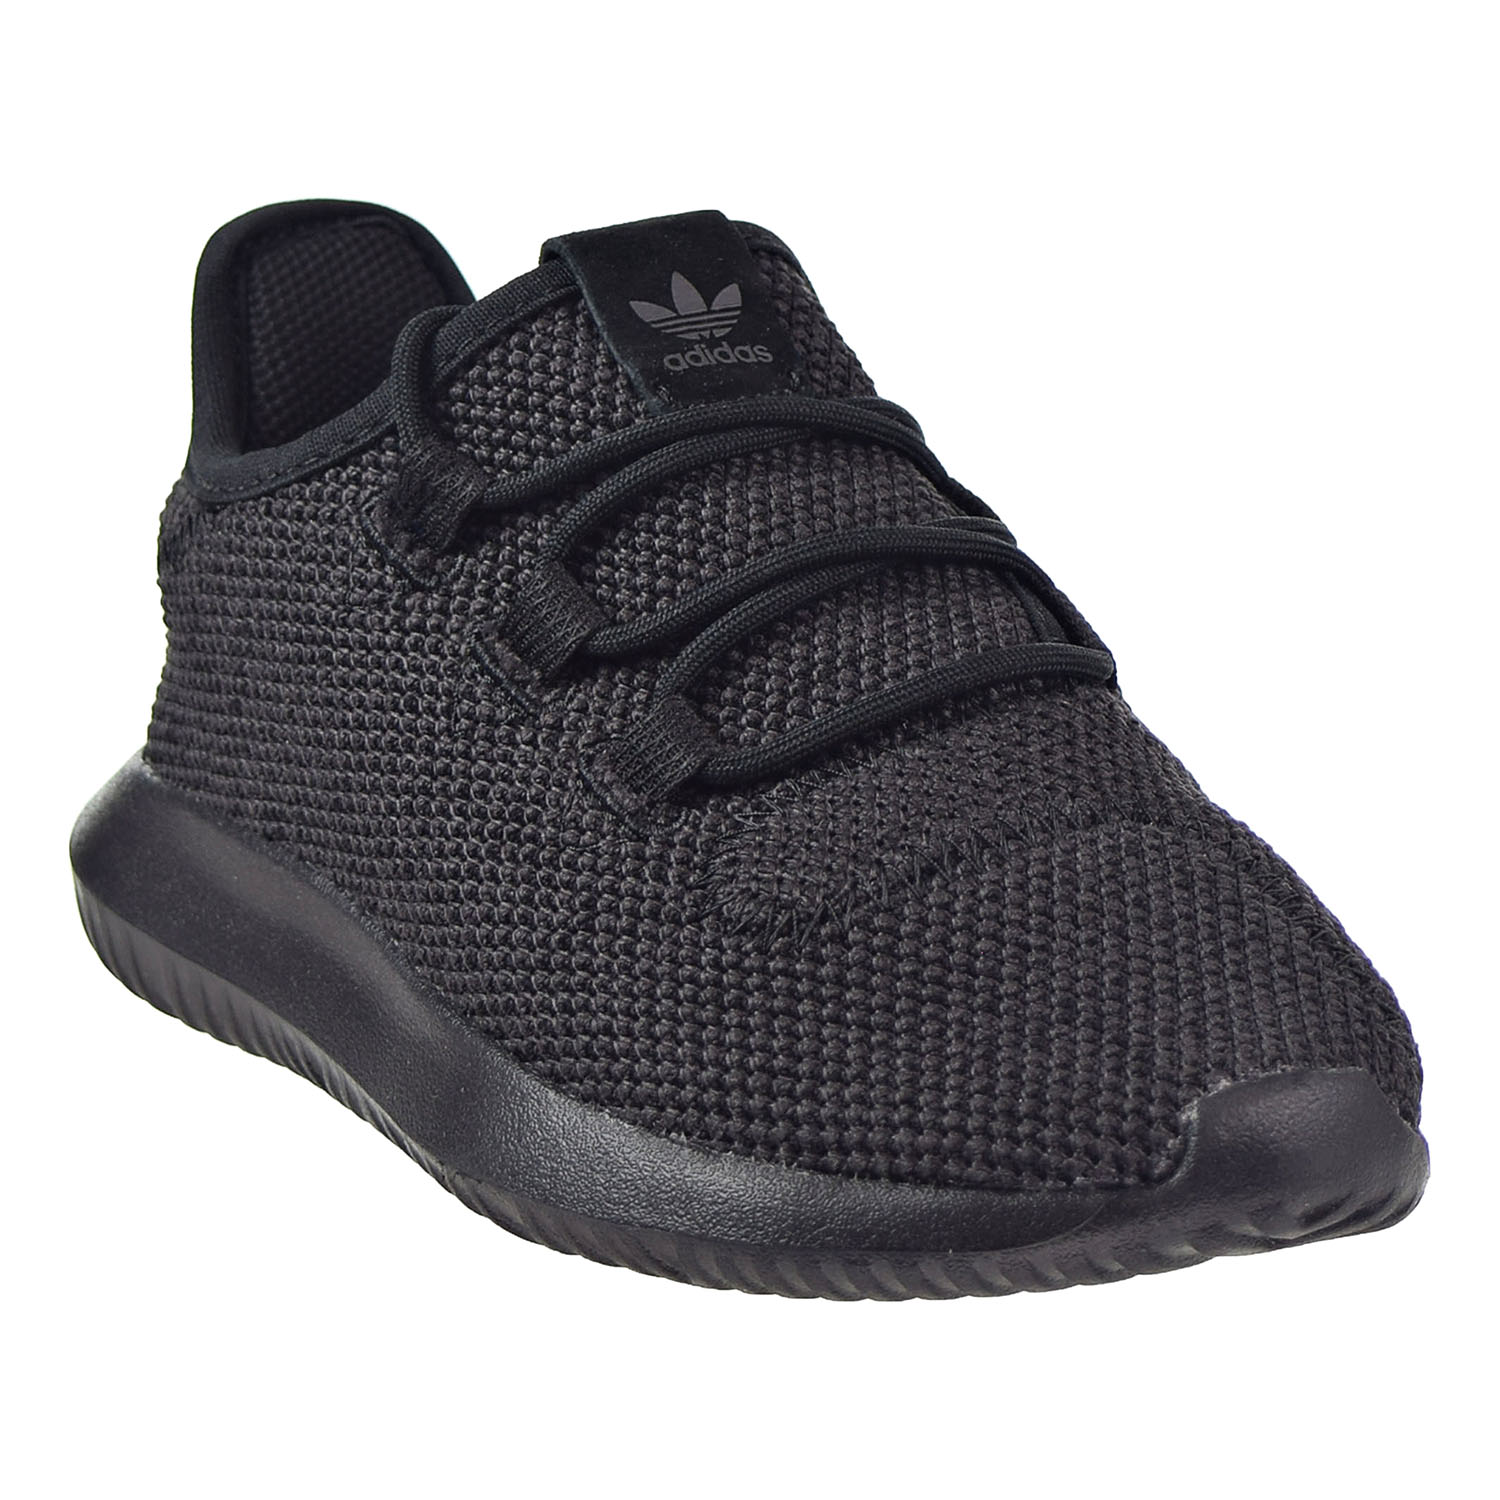 adidas tubular shadow black knit